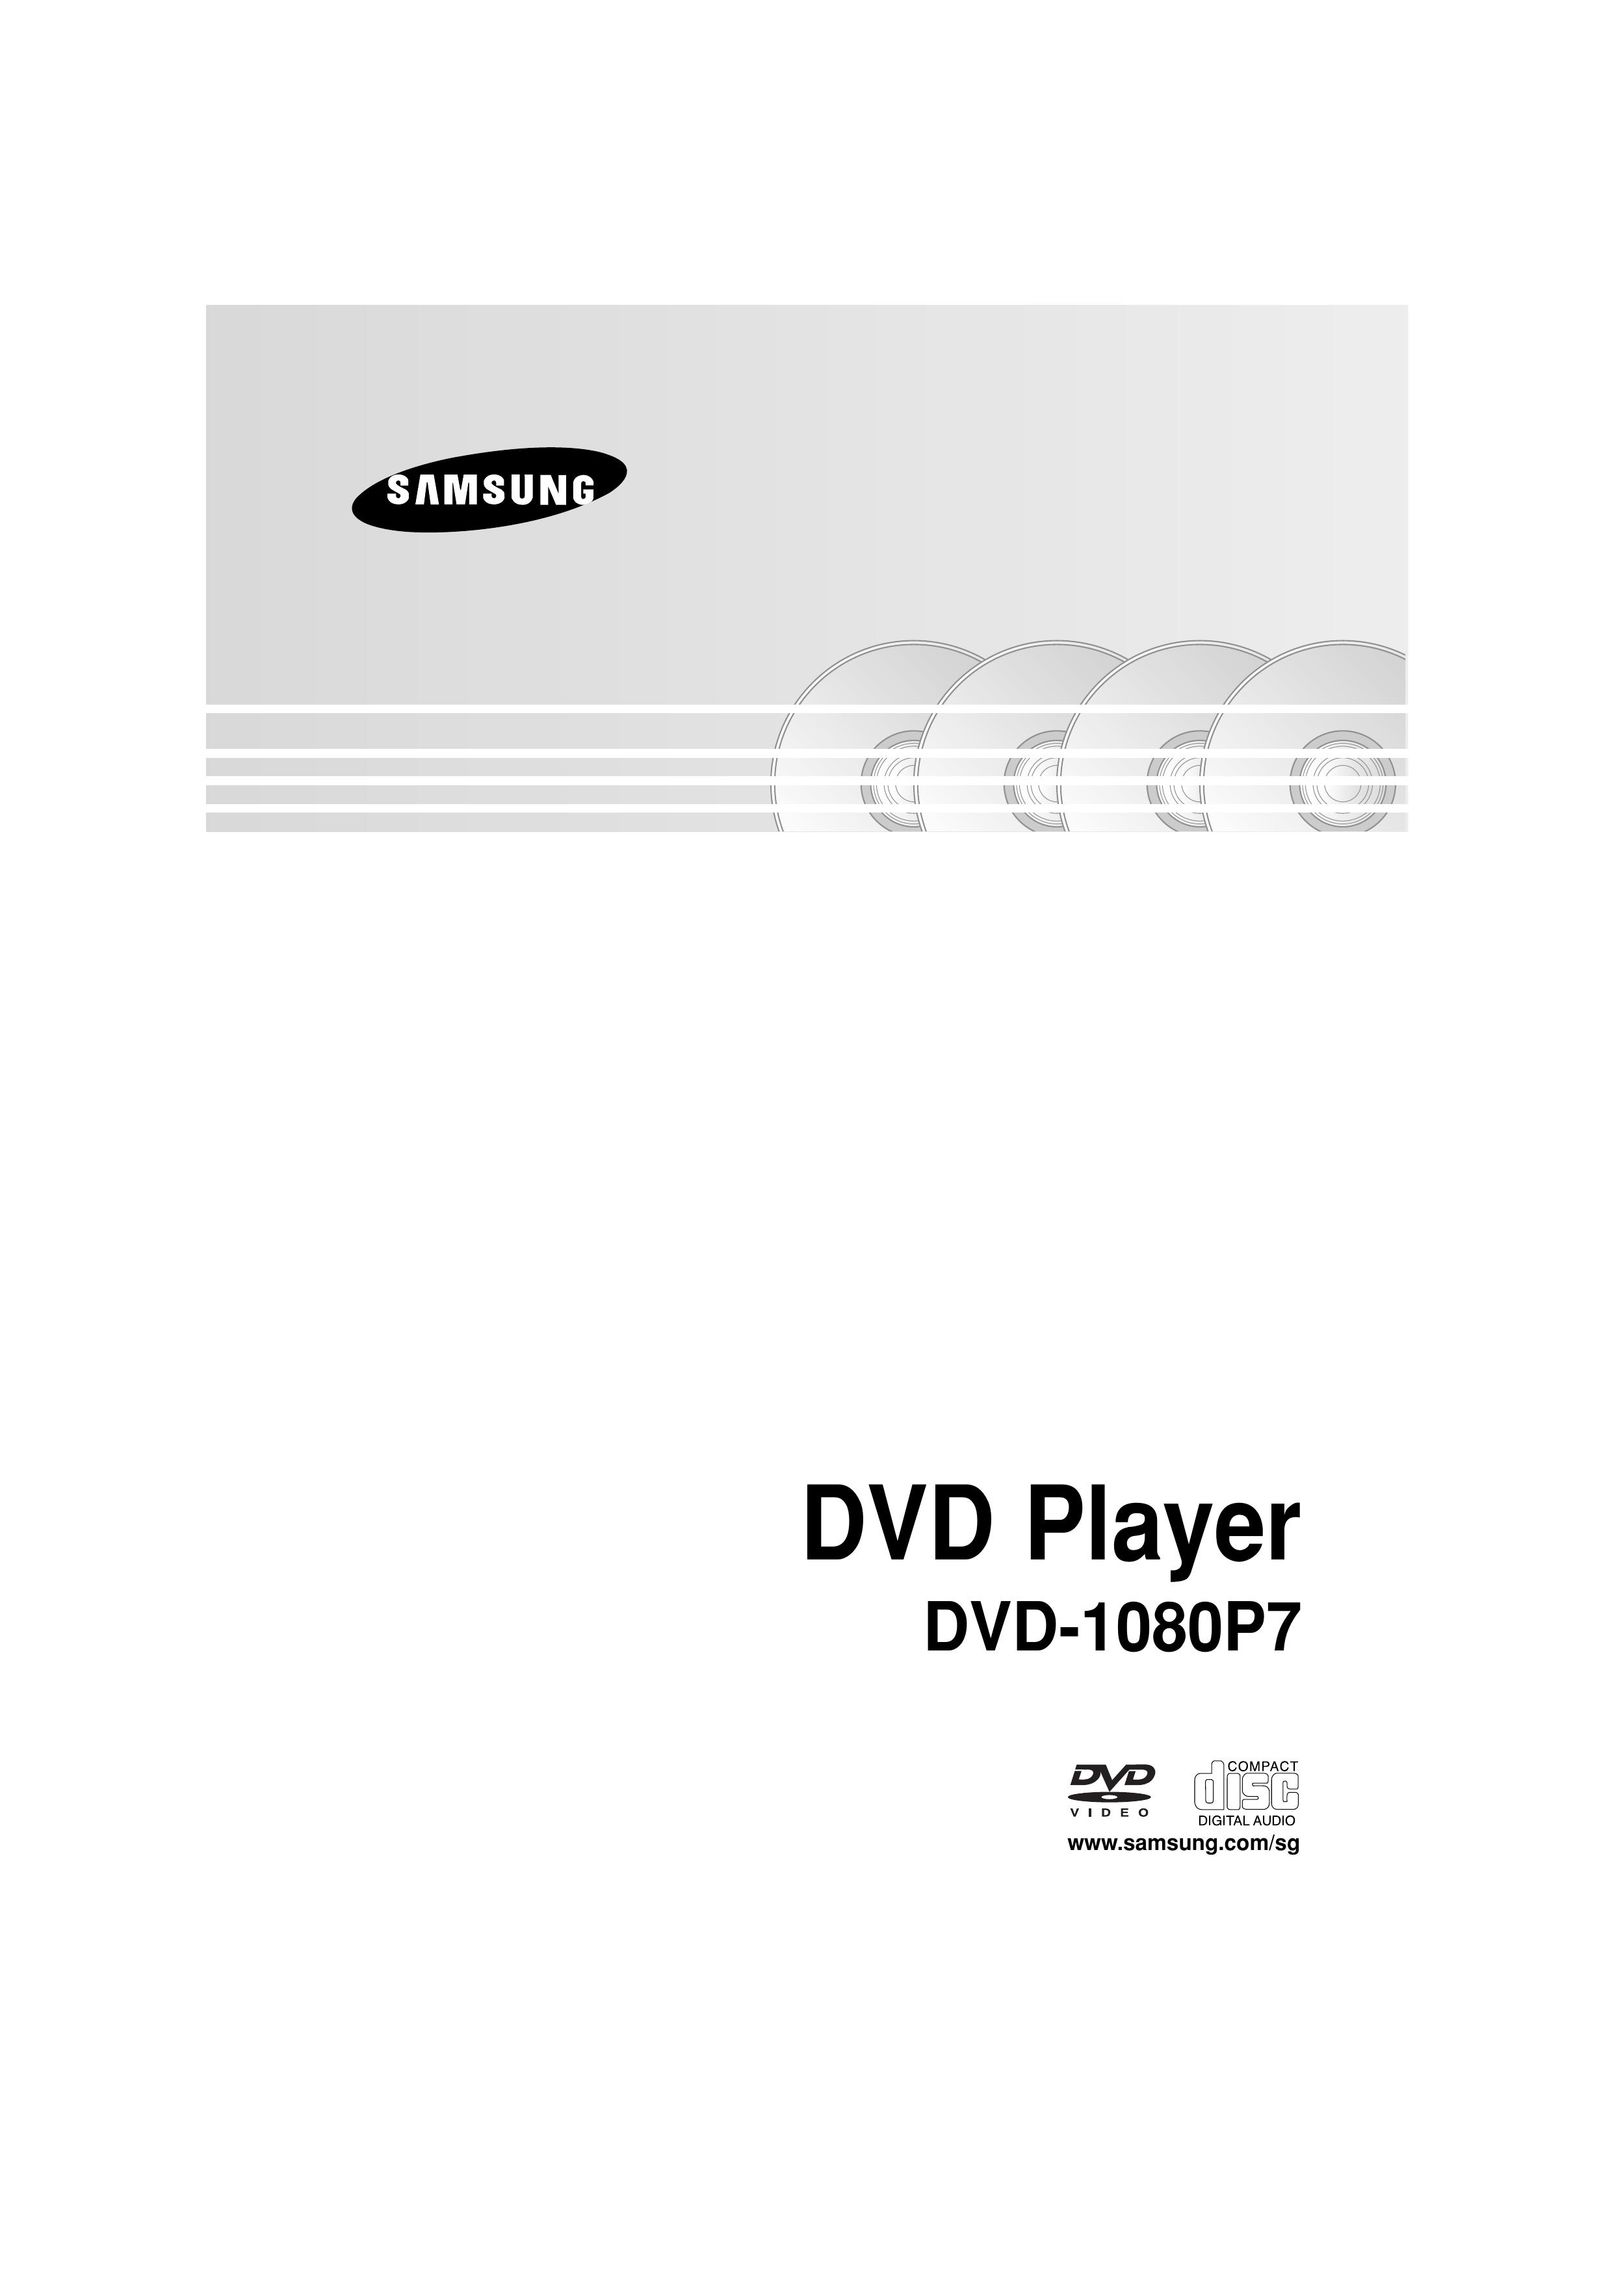 Samsung 1080P7 DVD Player User Manual